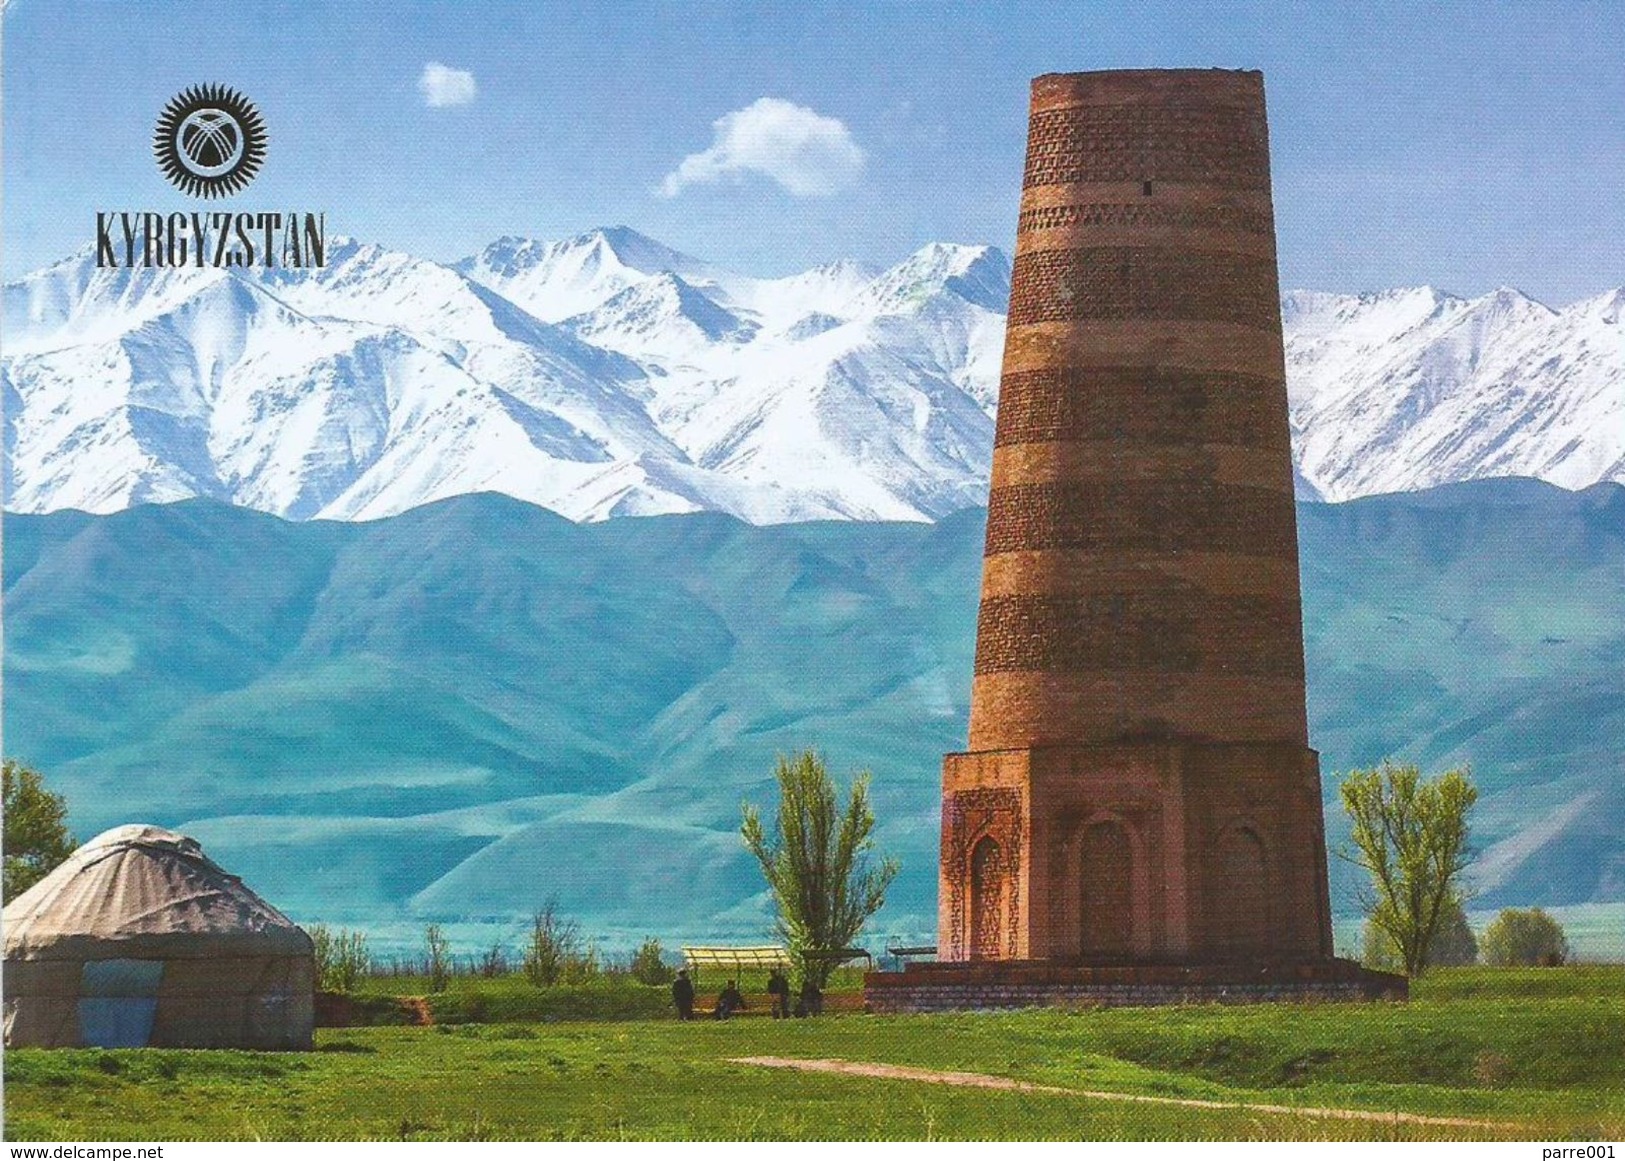 Kyrgyzstan 2017 Bishkek Map Cartography 11th Century Burana Tower Mountains Code 02 Postal Stationary Card - Kirgizië